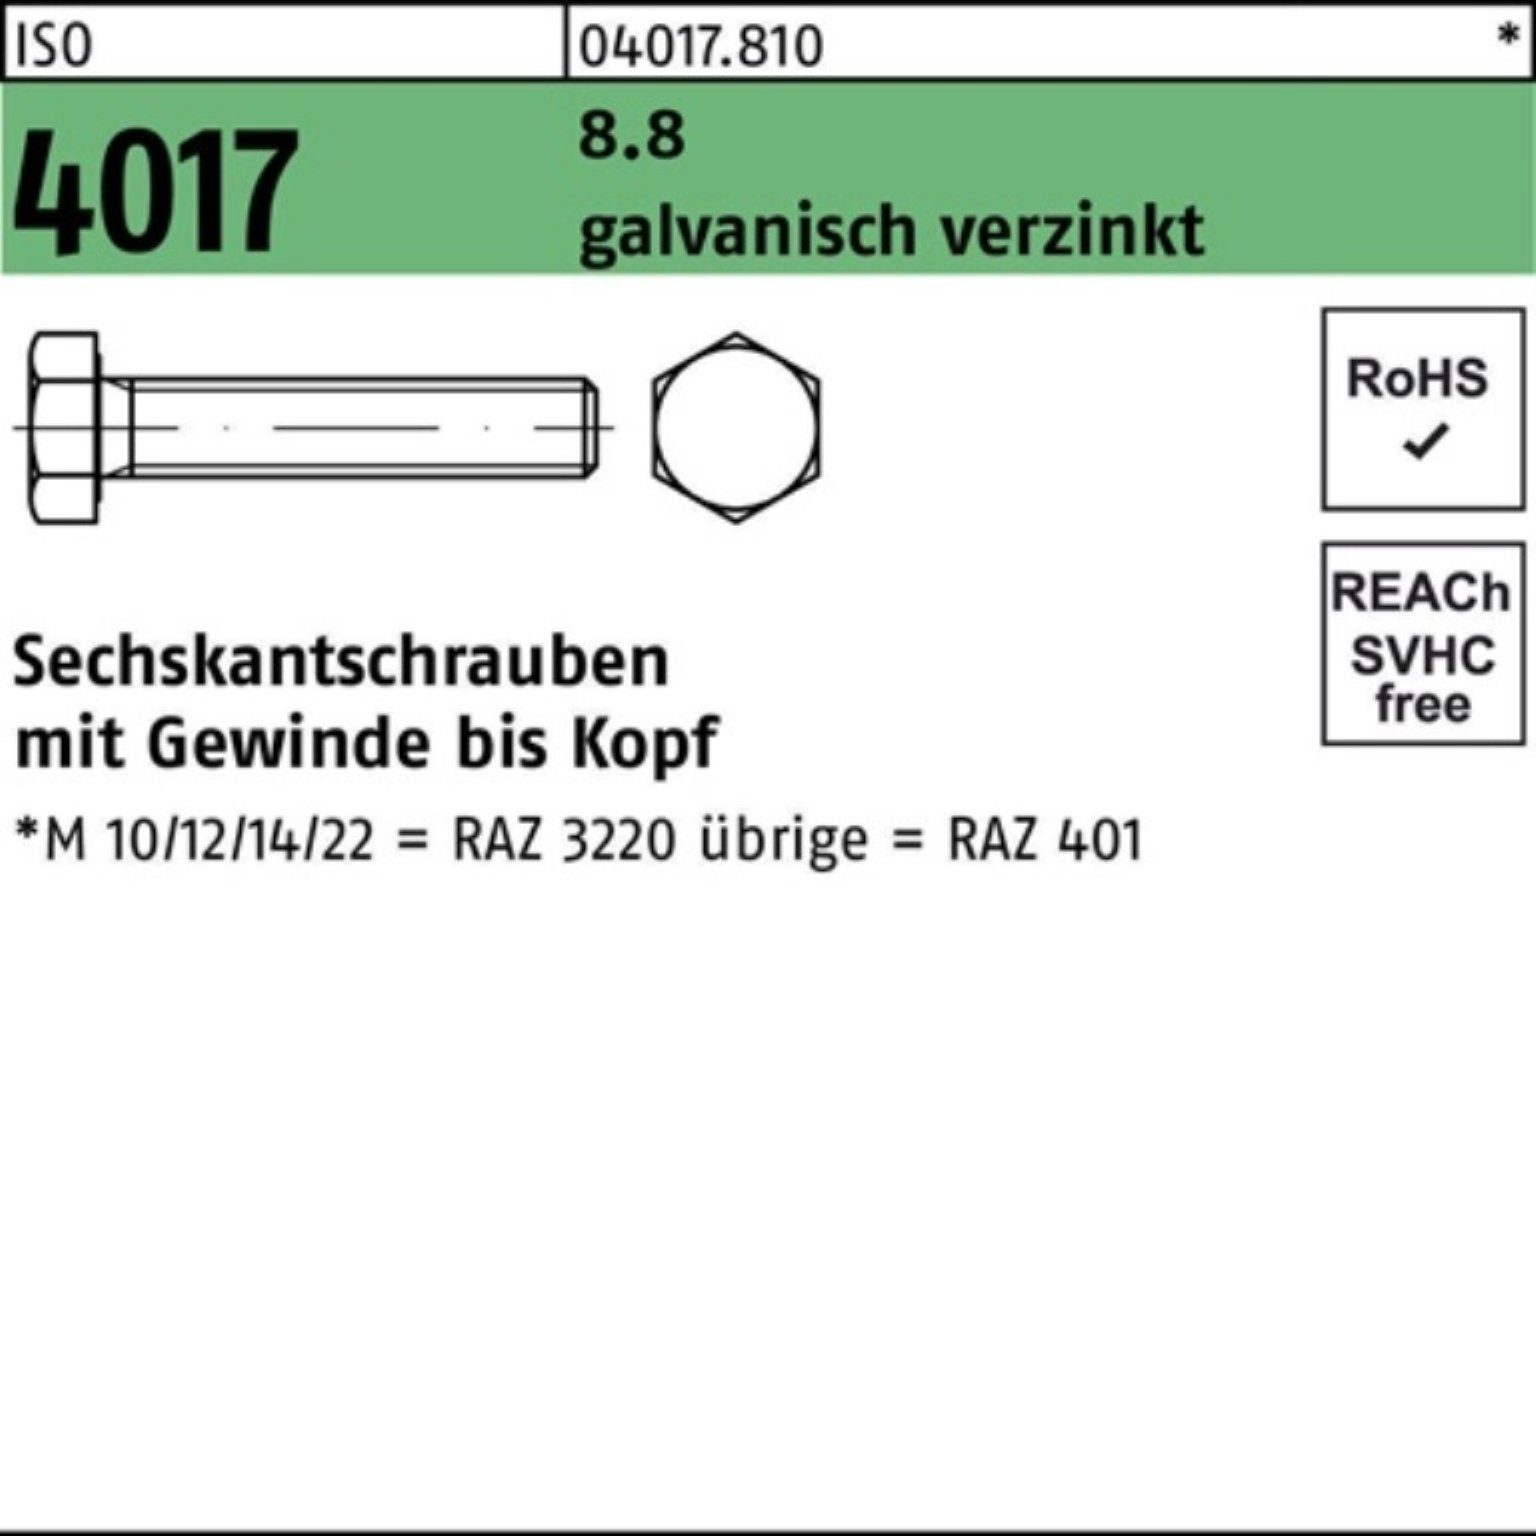 Bufab Sechskantschraube 100er Sechskantschraube M16x 4017 St 50 Pack 8.8 60 ISO galv.verz. VG